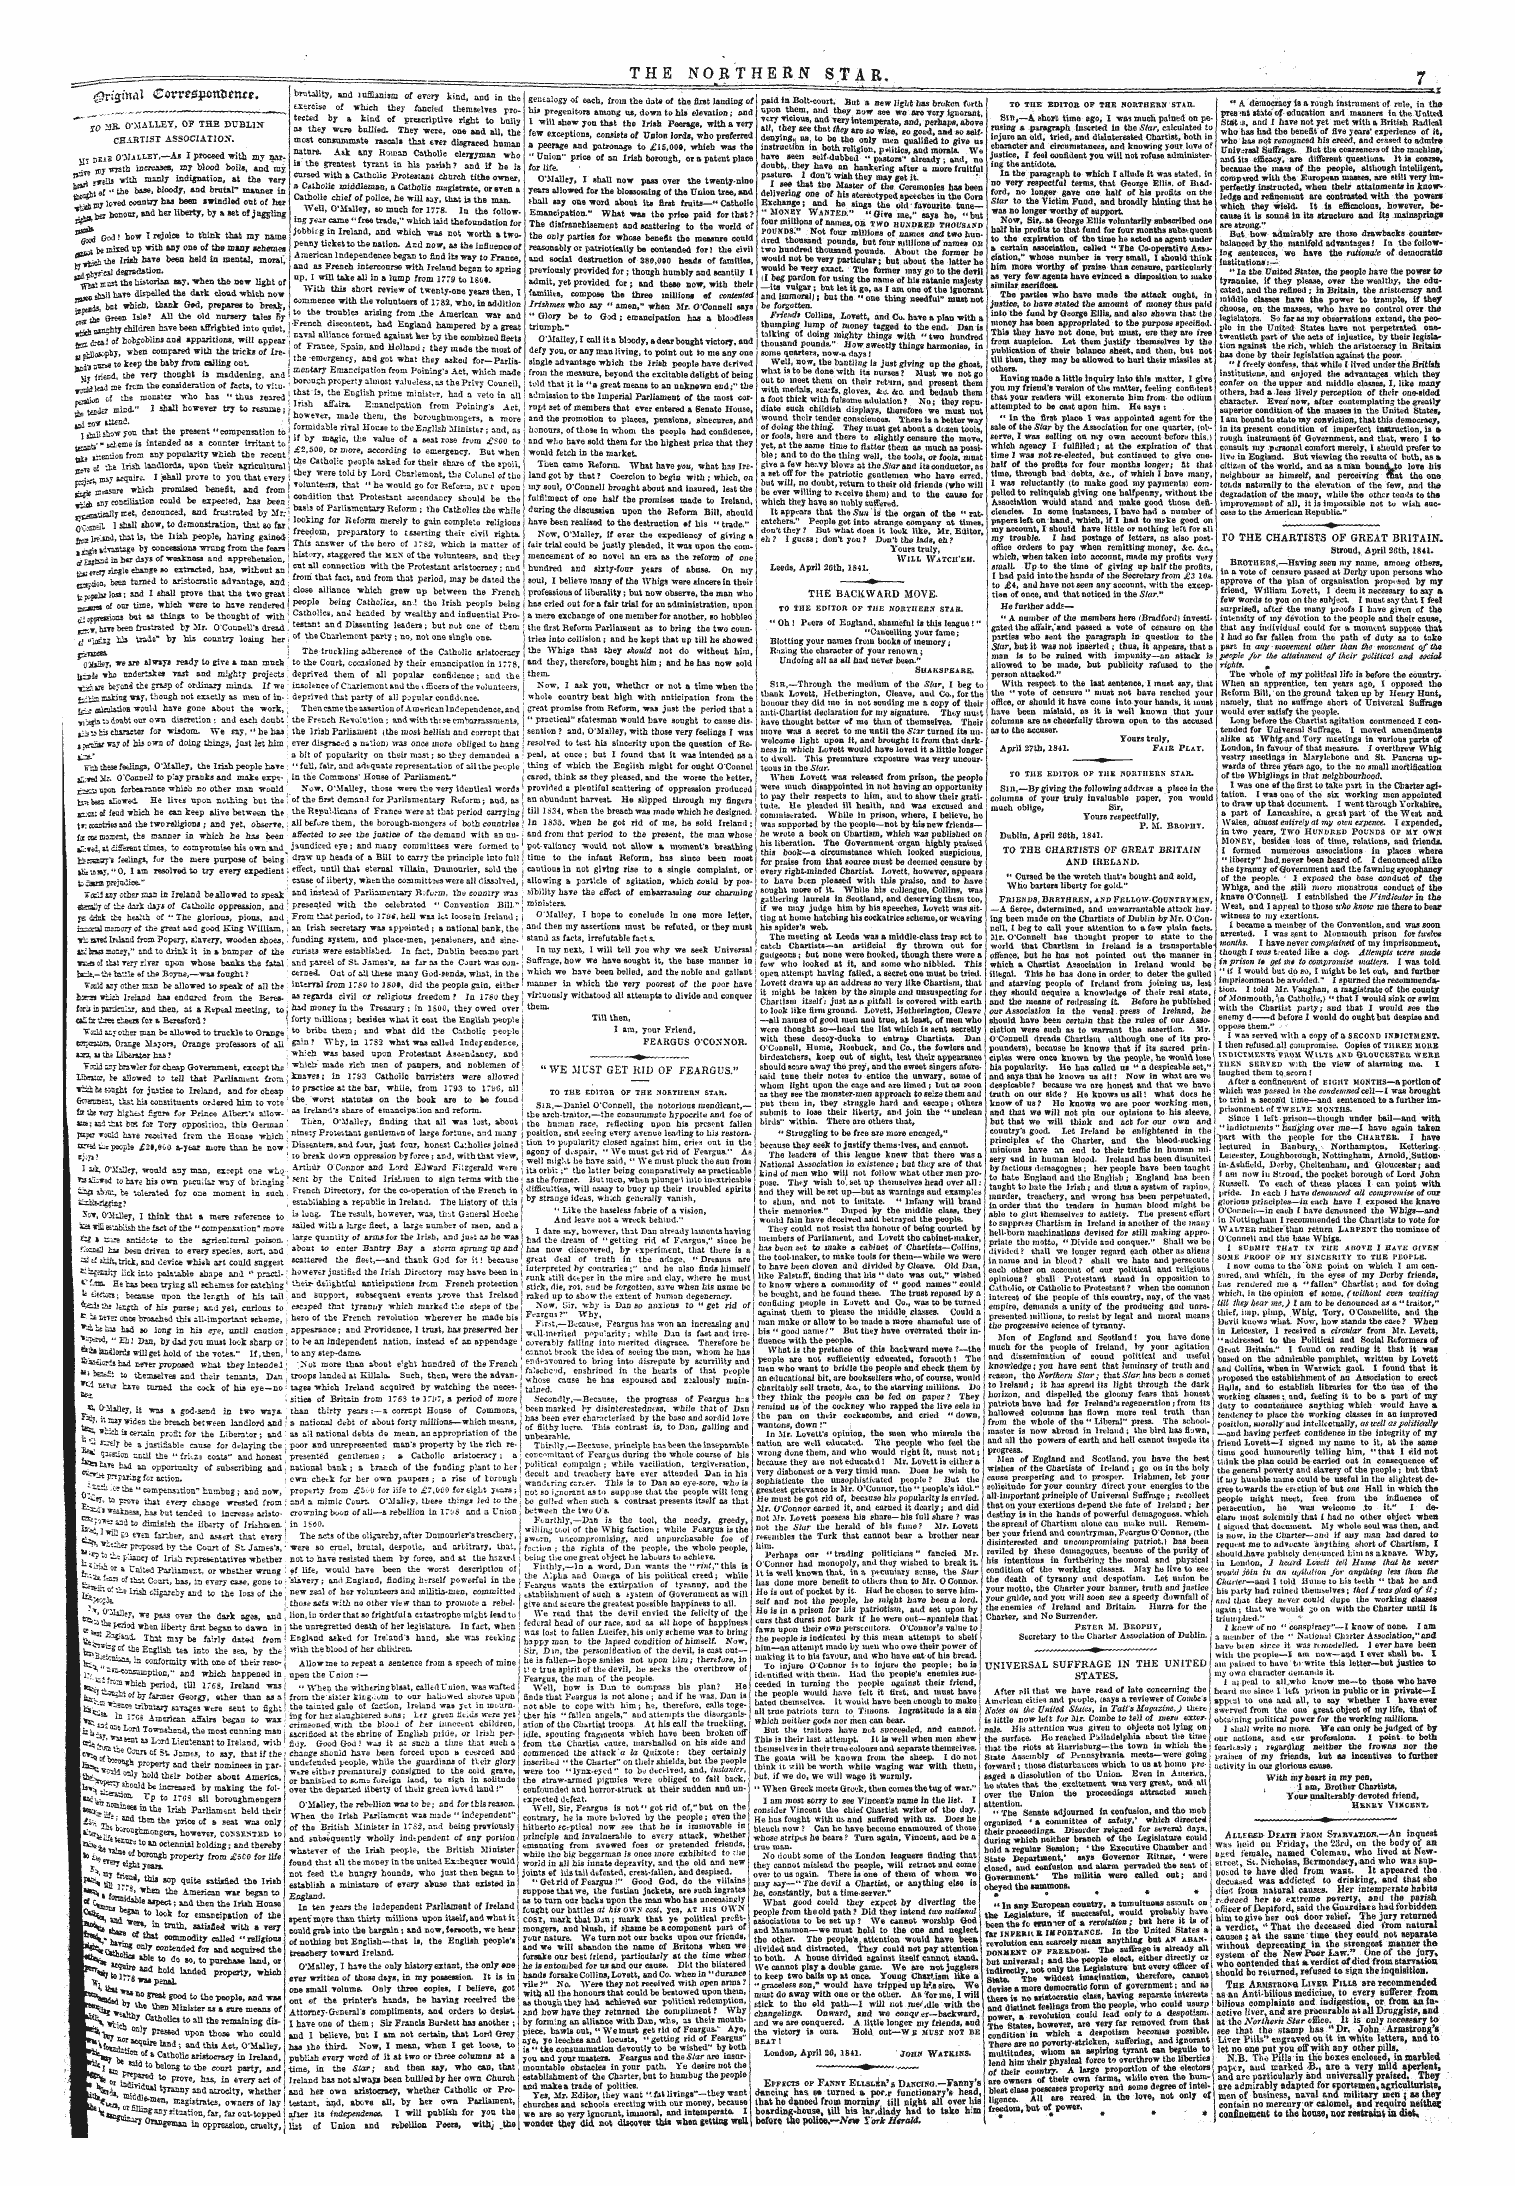 Northern Star (1837-1852): jS F Y, 3rd edition: 7